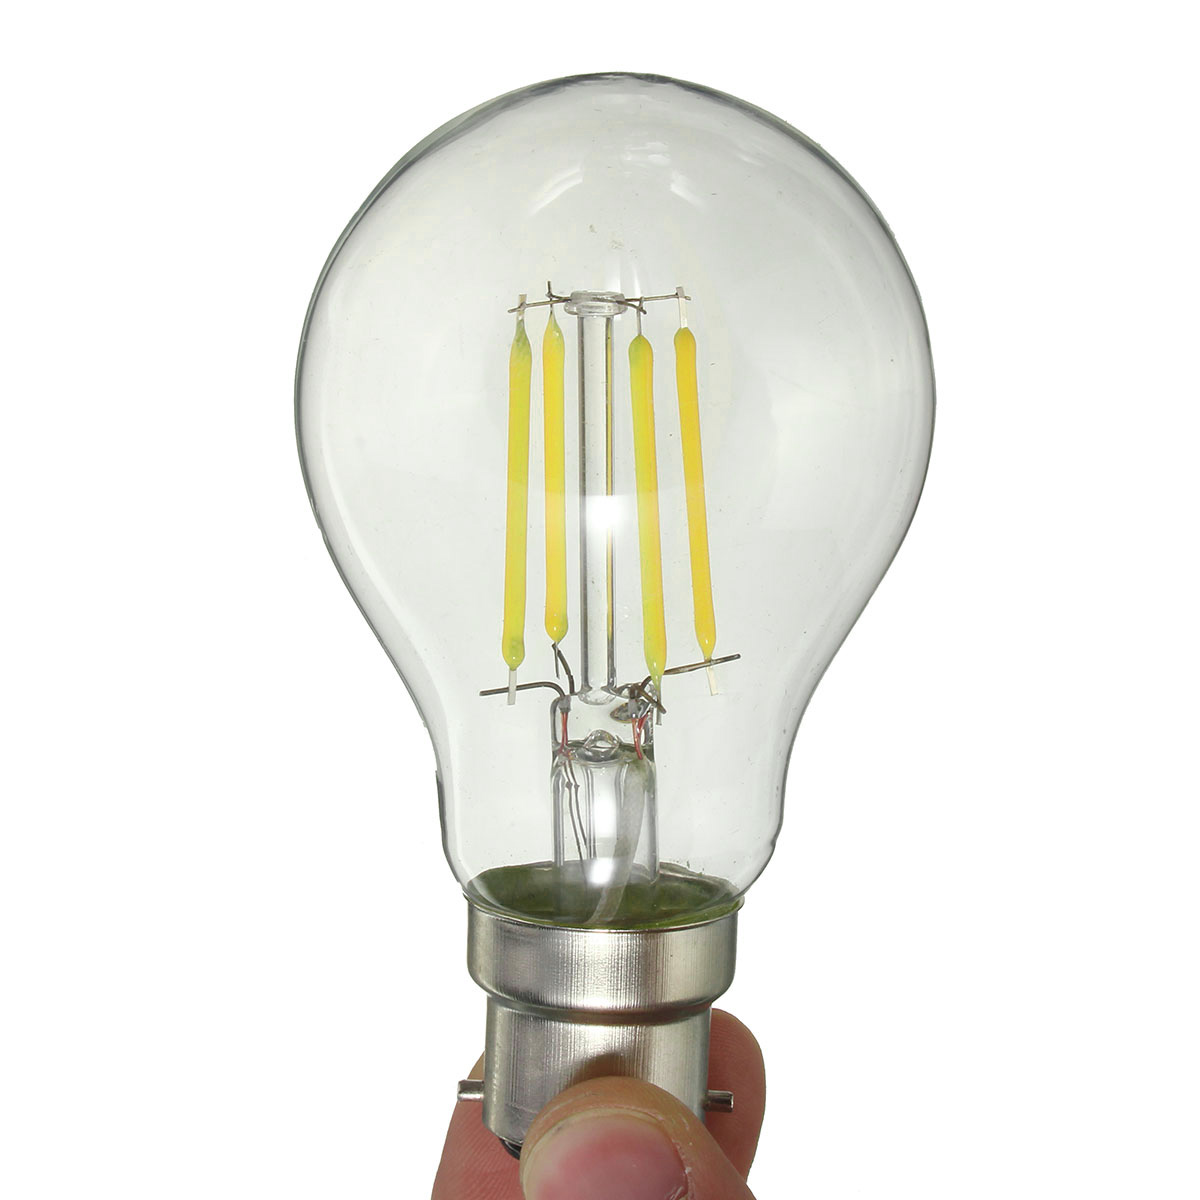 Dimmable-B22-G45-4W-Pure-White-Warm-White-COB-Retro-Vintage-Edison-Incandescent-Light-Bulb-AC220V-1063711